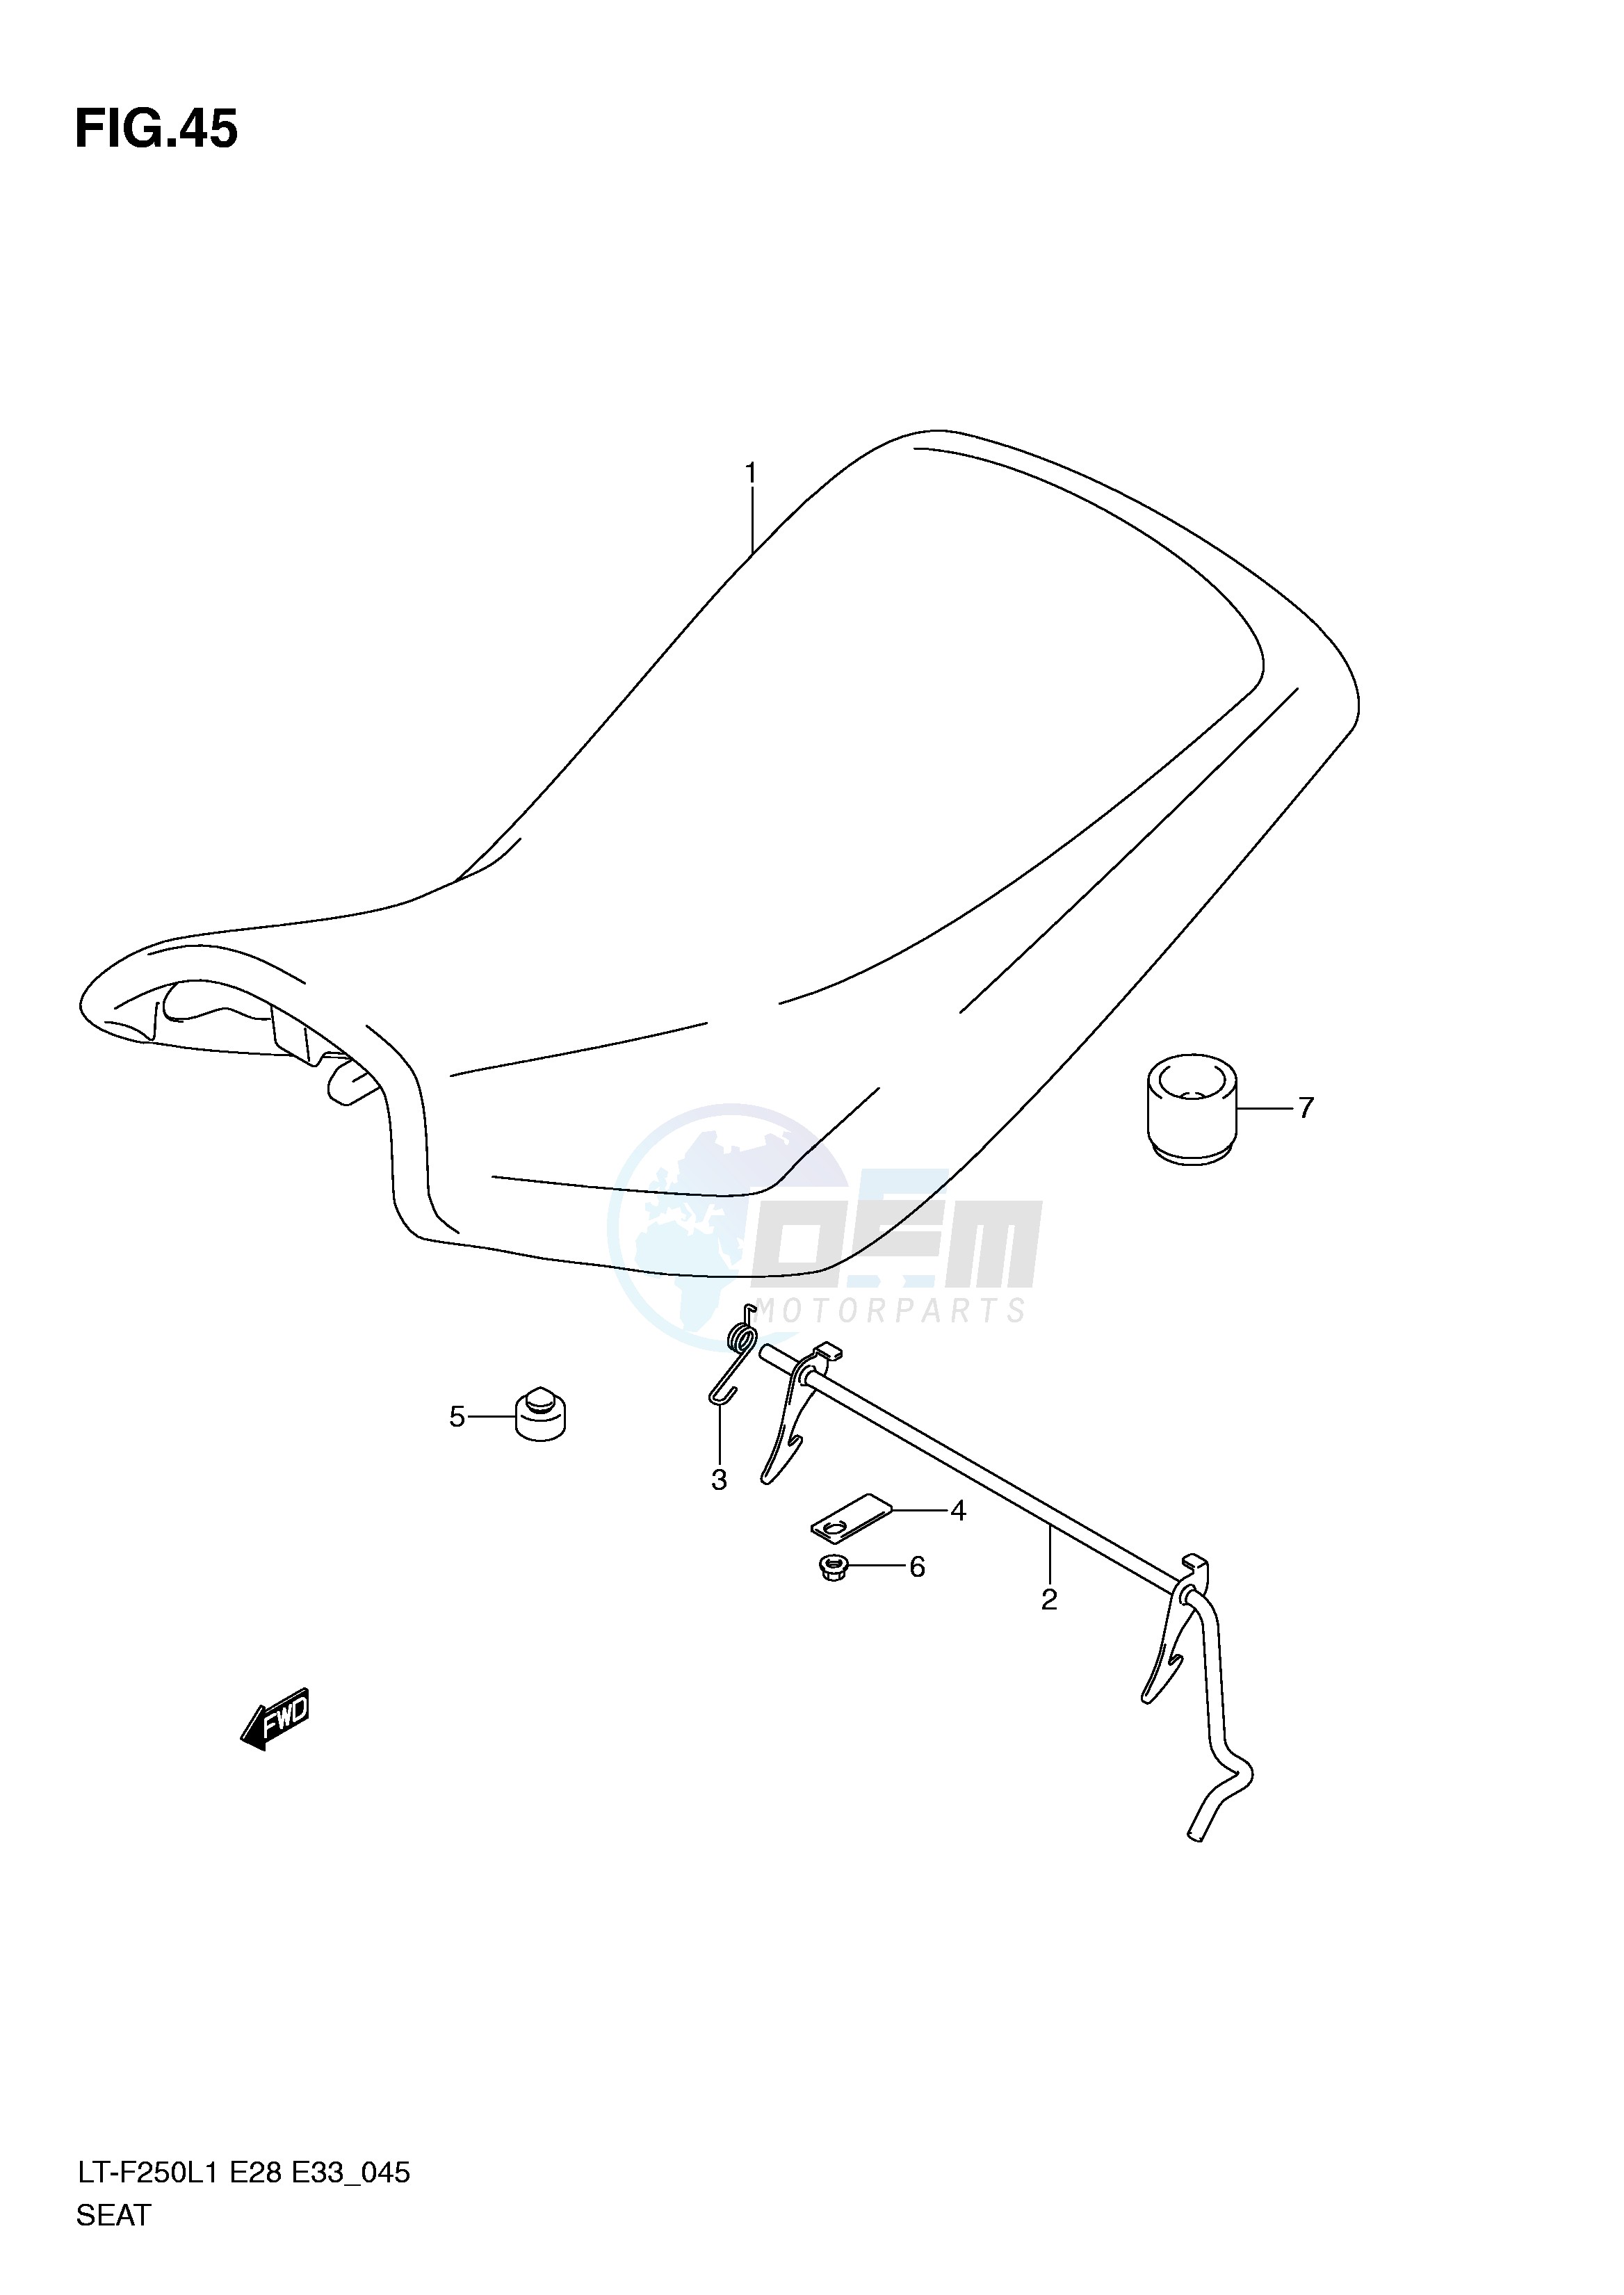 SEAT (LT-F250L1 E33) blueprint